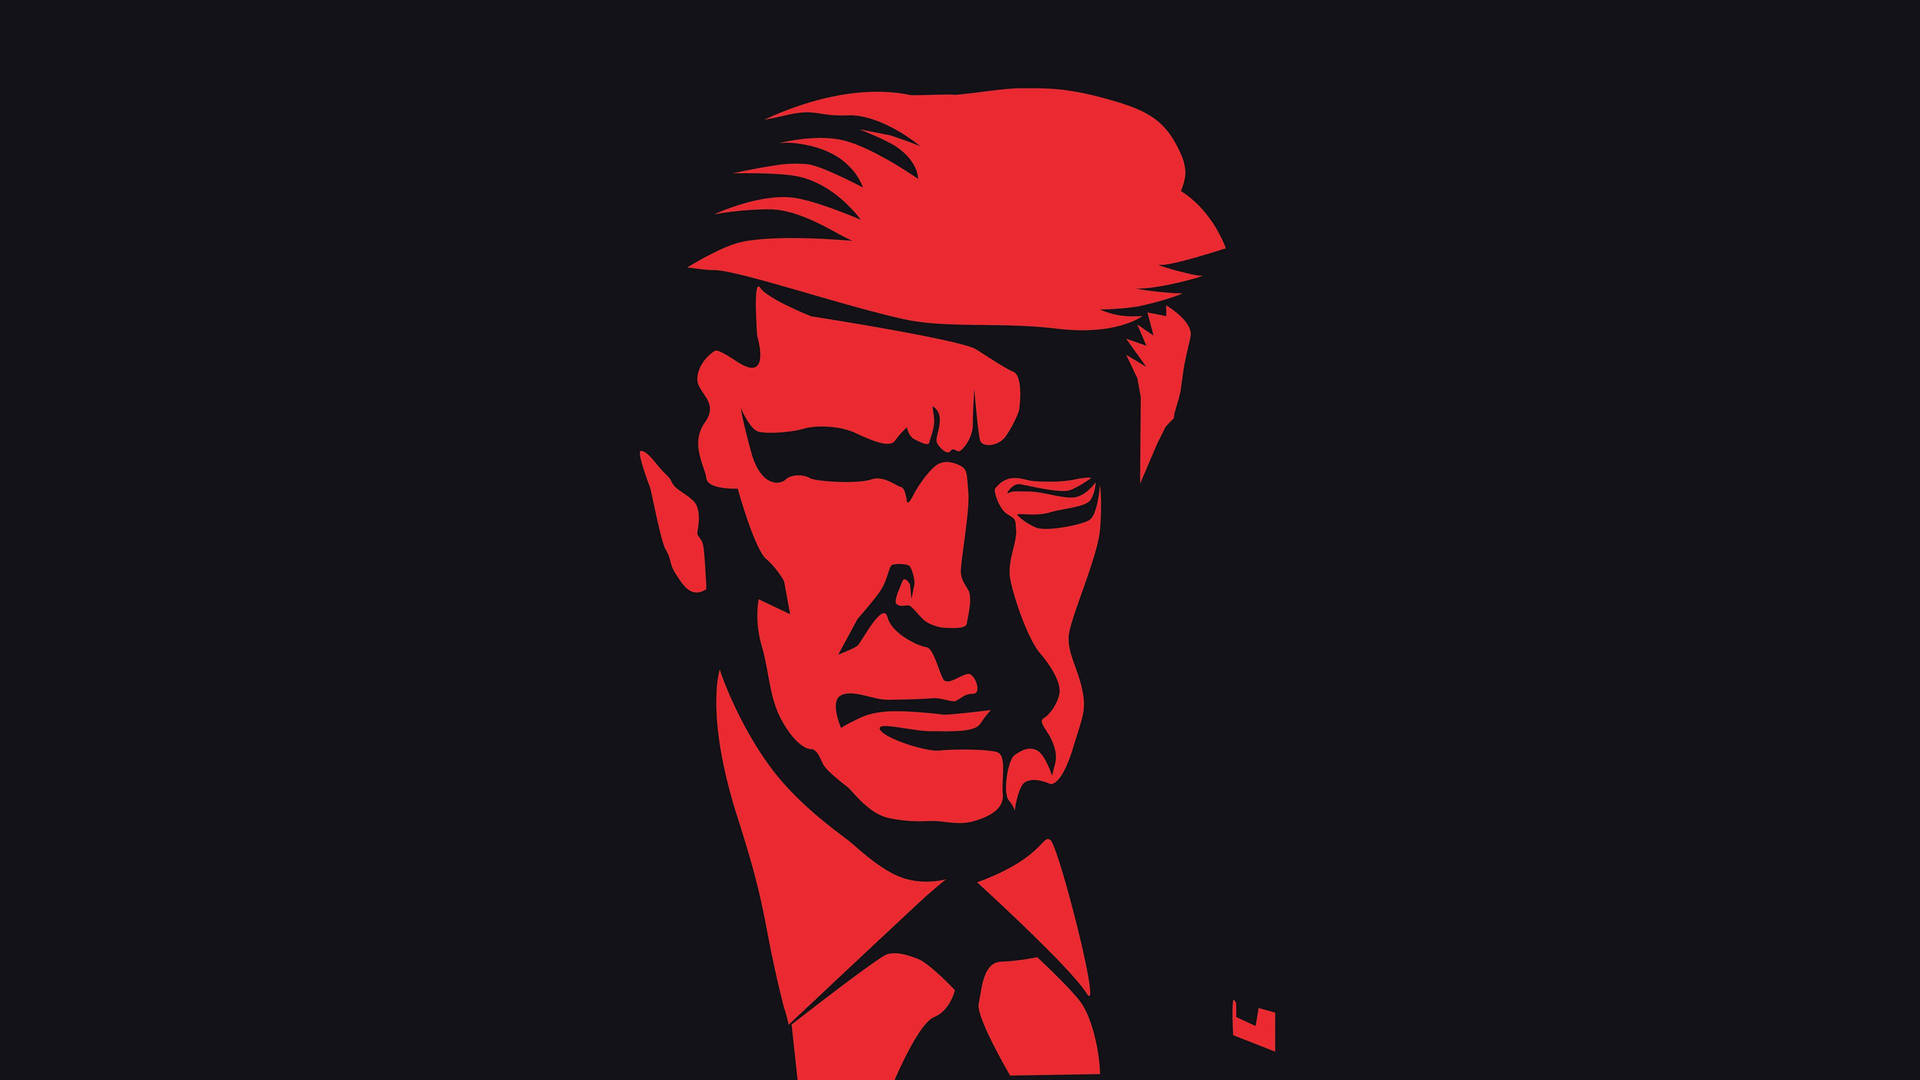 Black And Red Minimalist Donald Trump Background